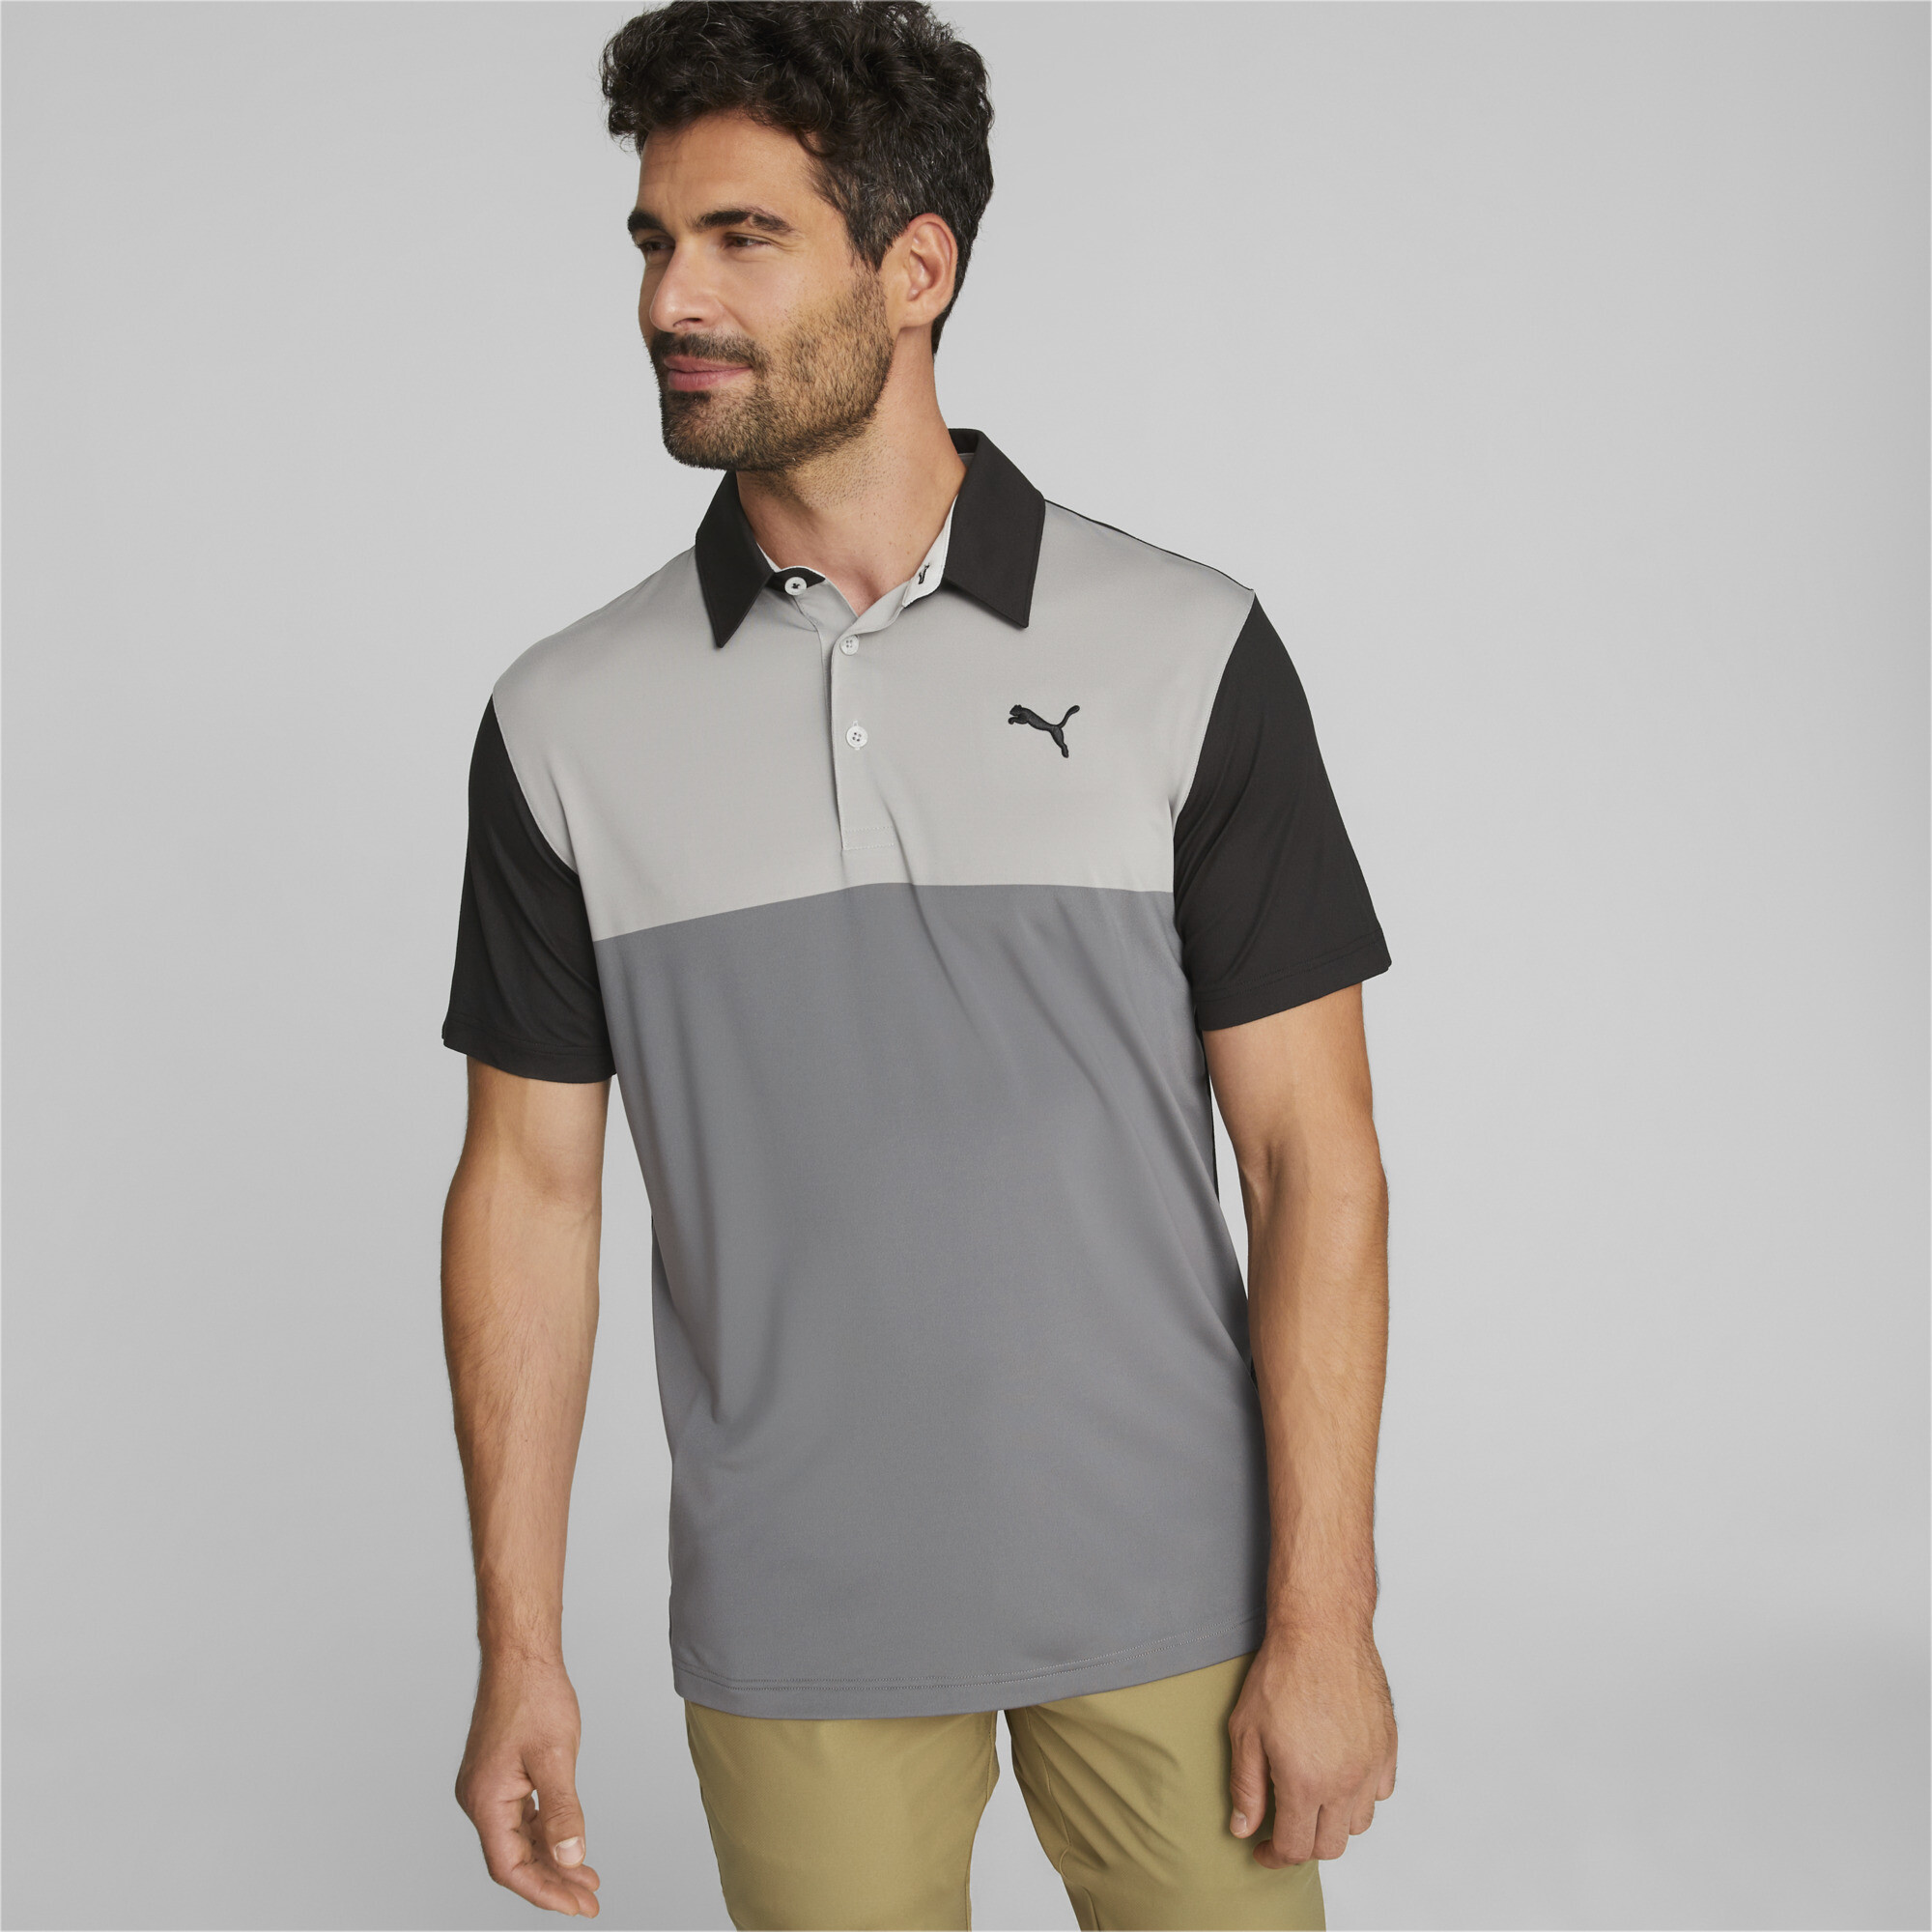 Men's Puma Cloudspun Colourblock Golf Polo Shirt T-Shirt, Black T-Shirt, Size 3XL T-Shirt, Clothing